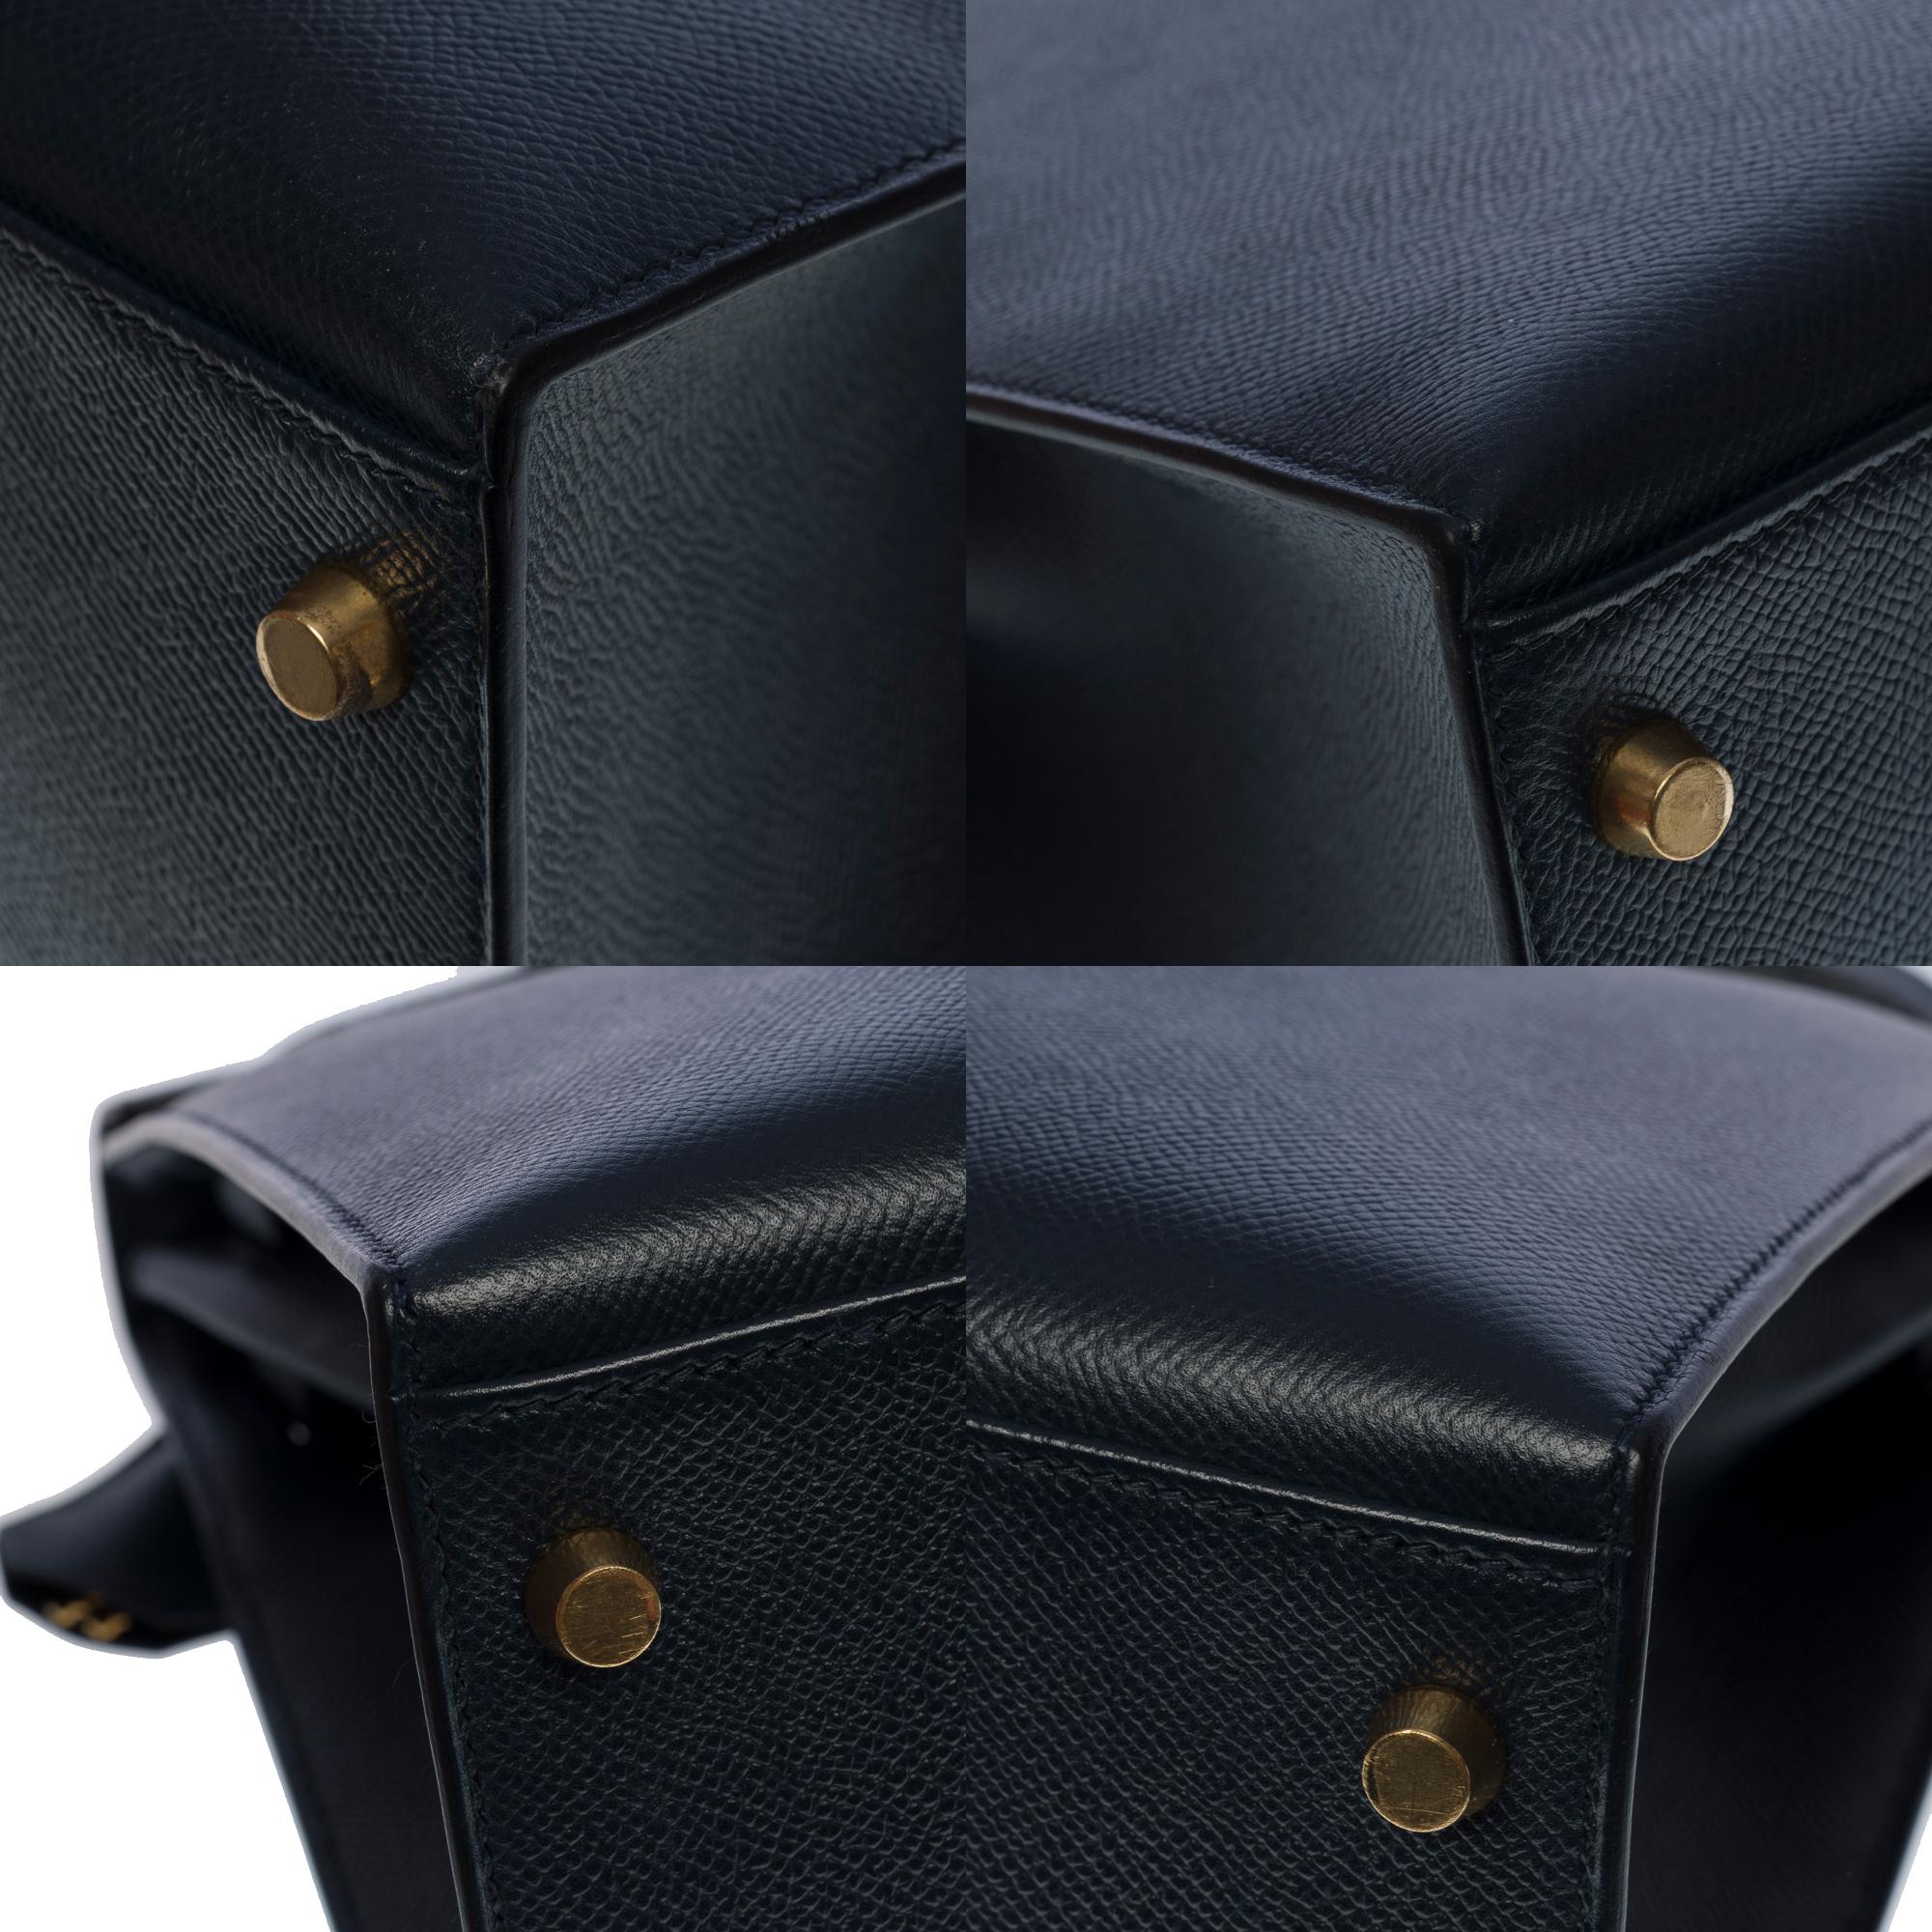 Hermès Kelly 35 sellier handbag strap in Courchevel bleu nuit leather, GHW 3